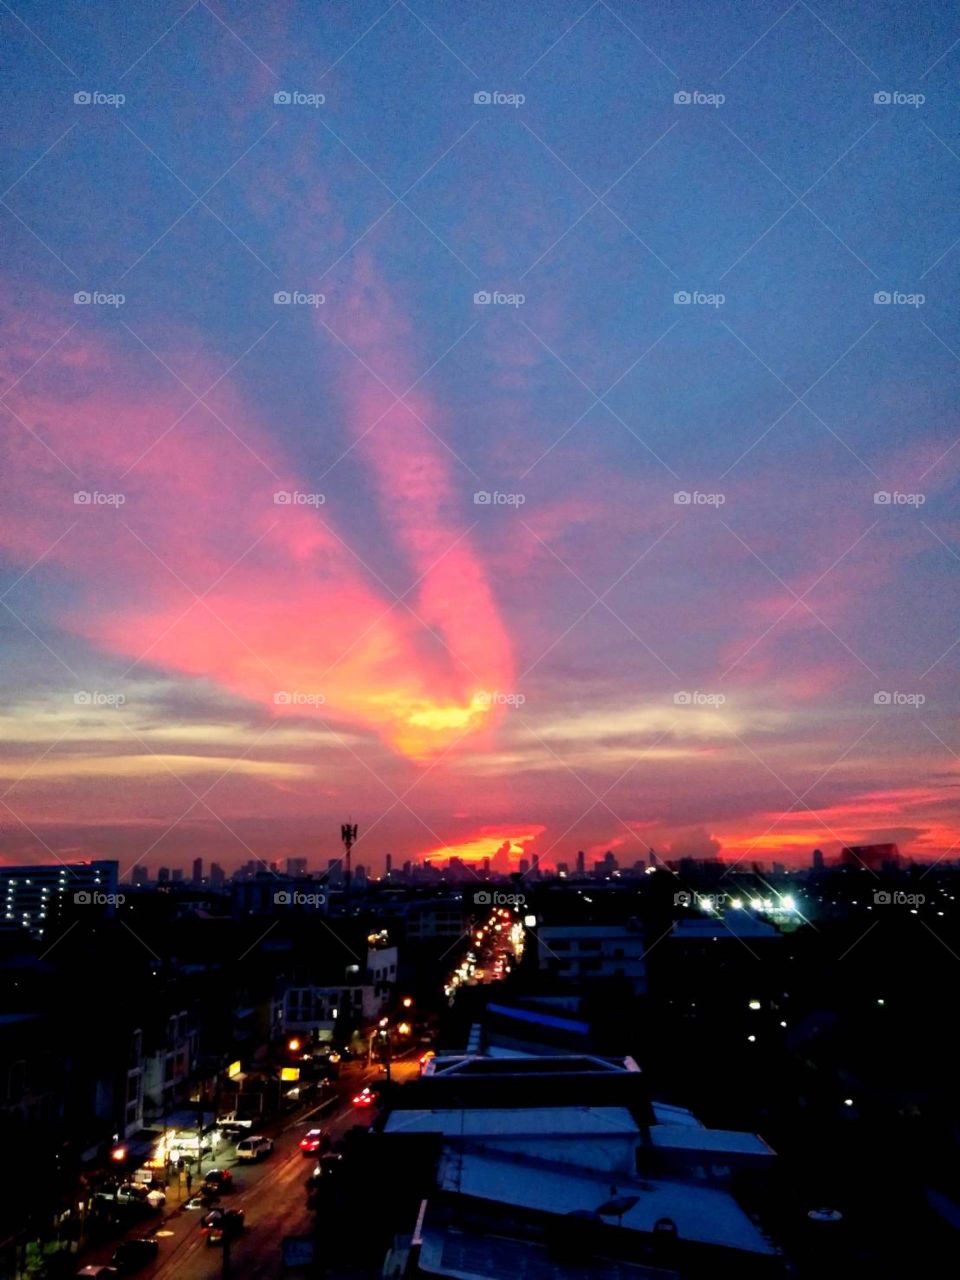 Senset view from Bangkok, Thailand.